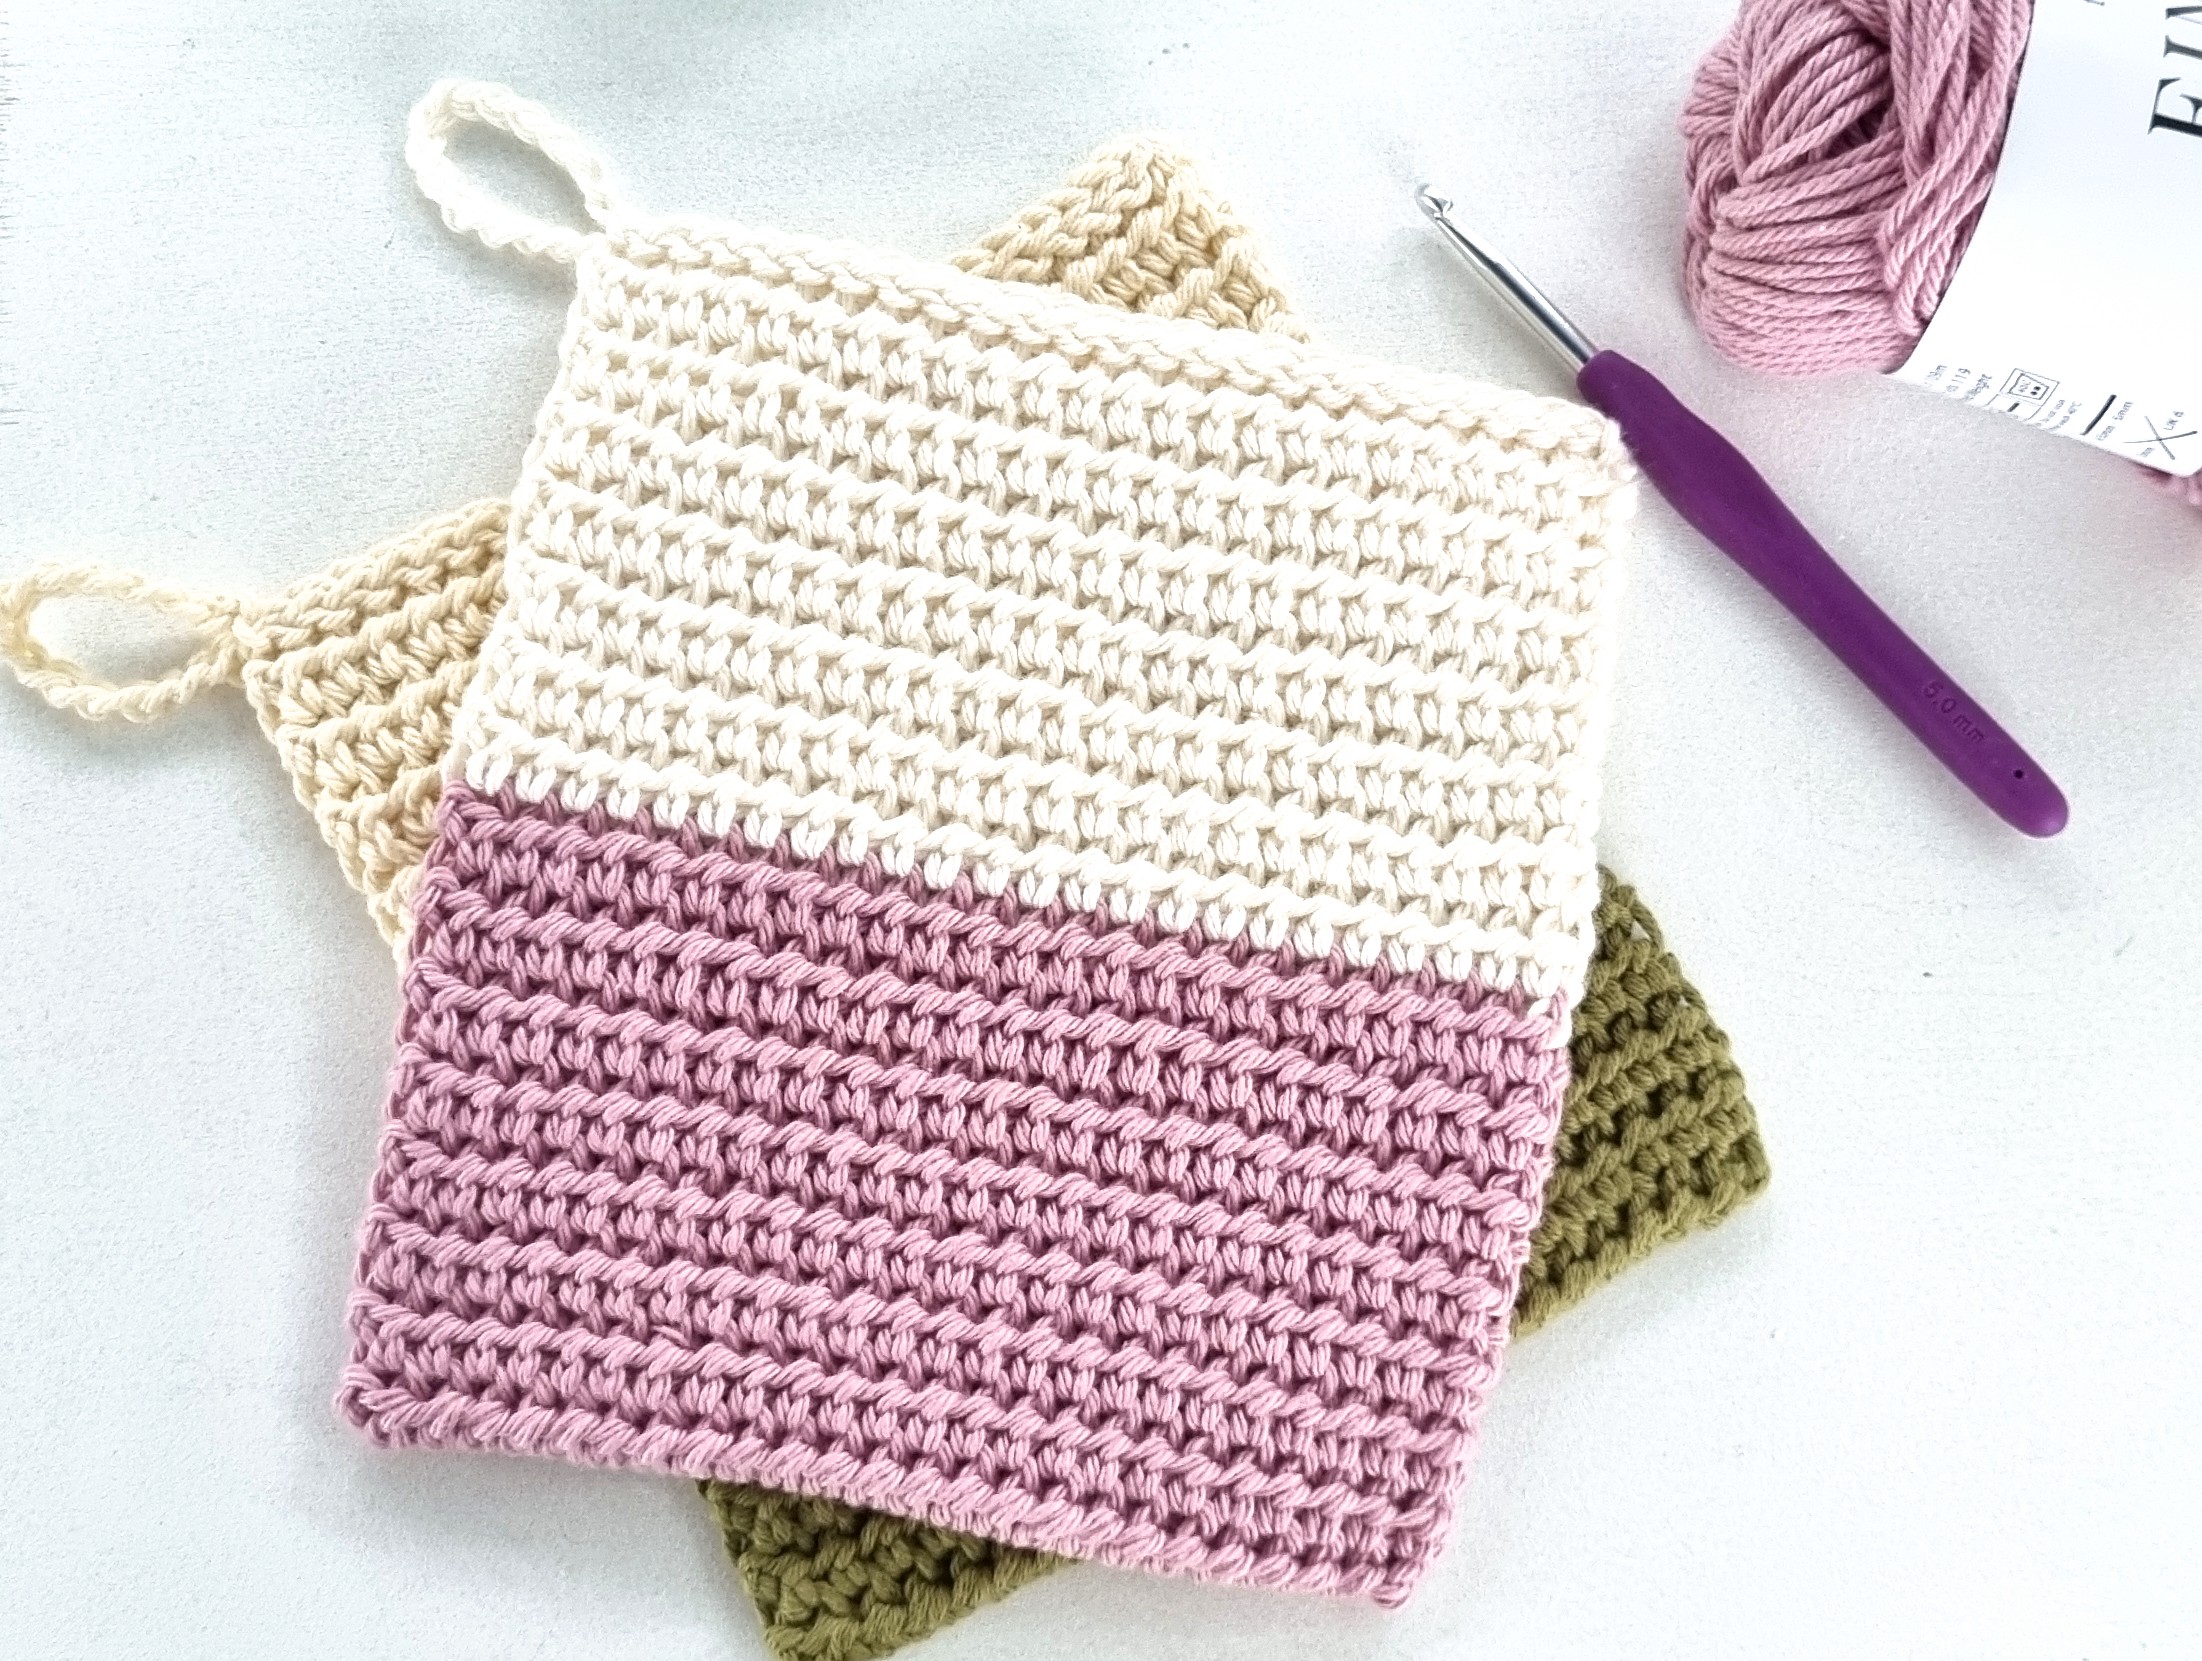 Double Thick Crochet Potholder Pattern